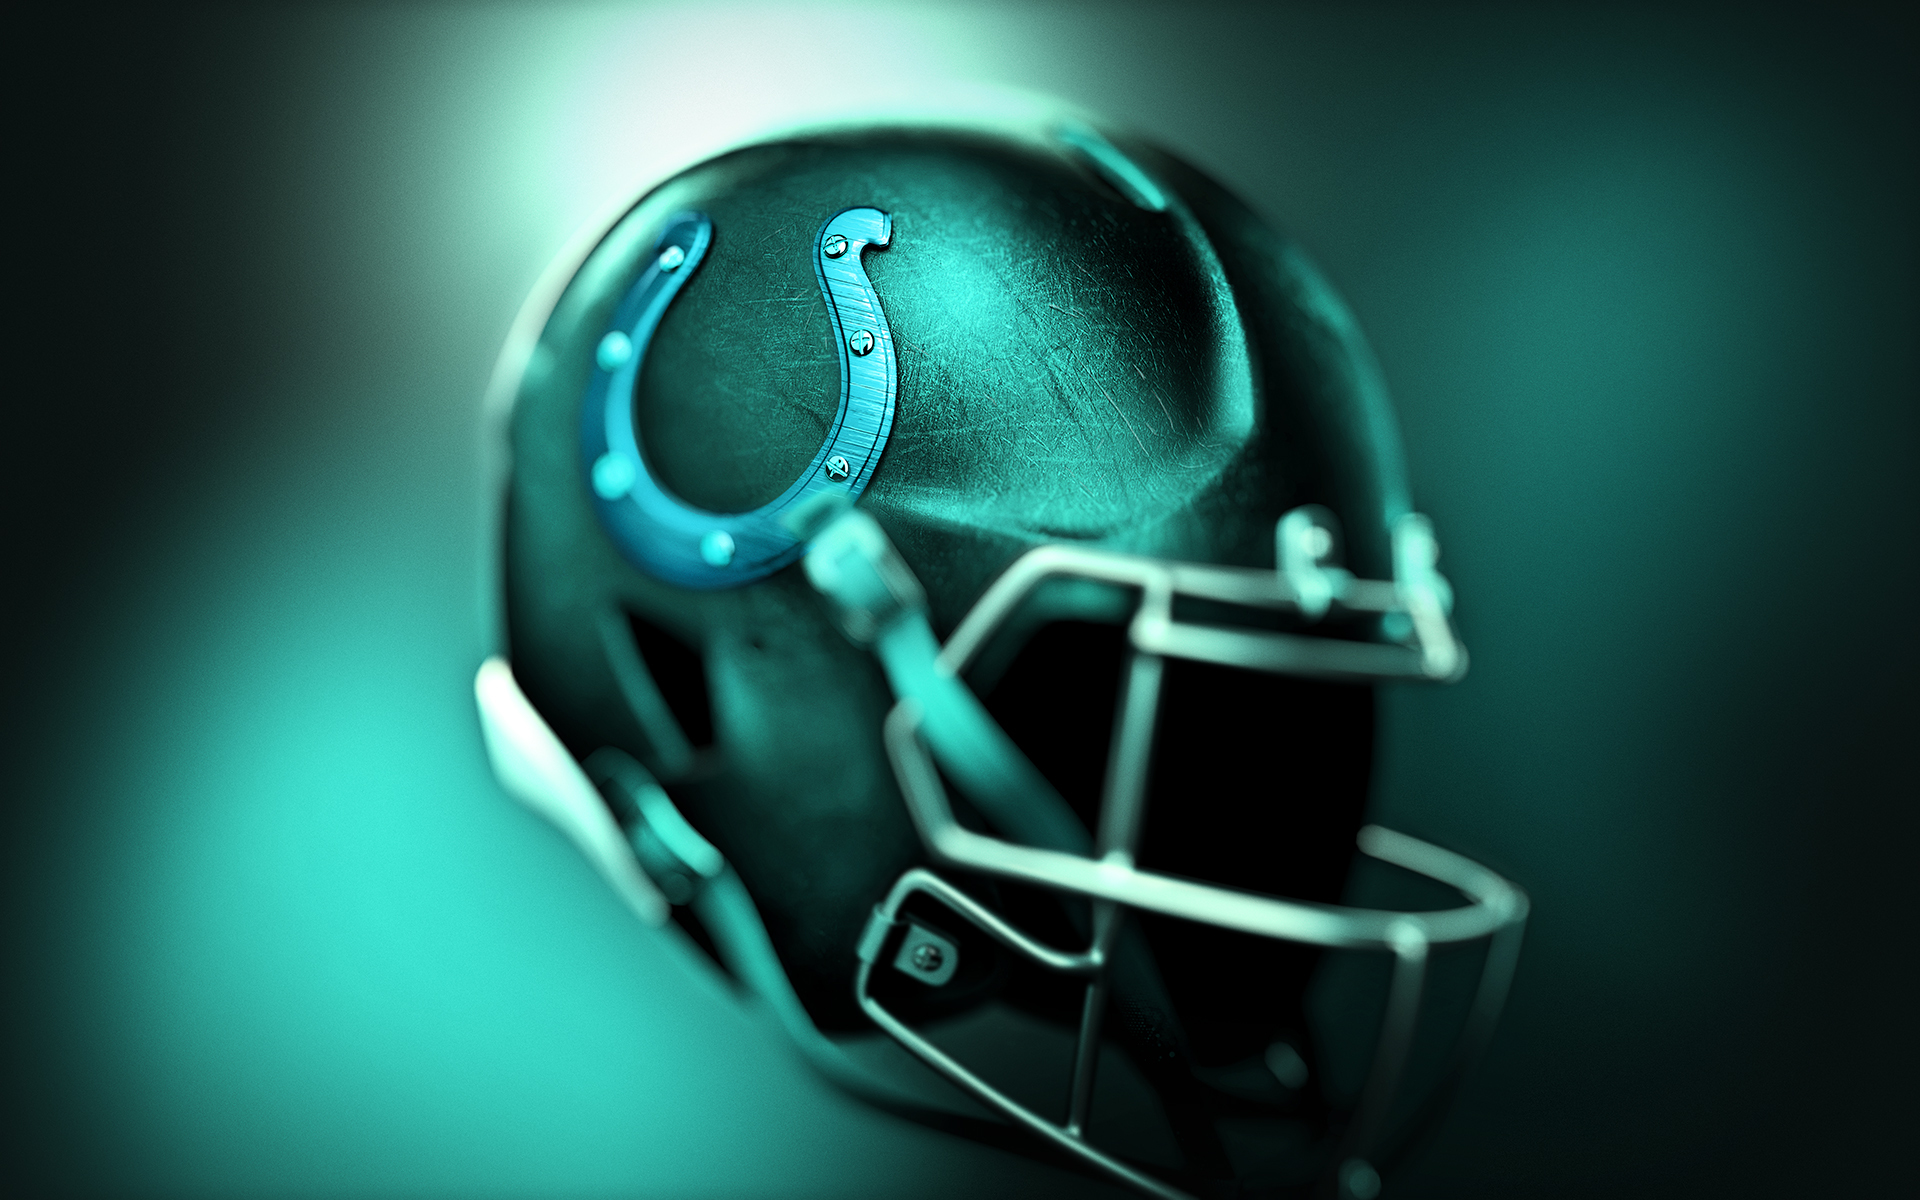 Indianapolis Colts football helmet